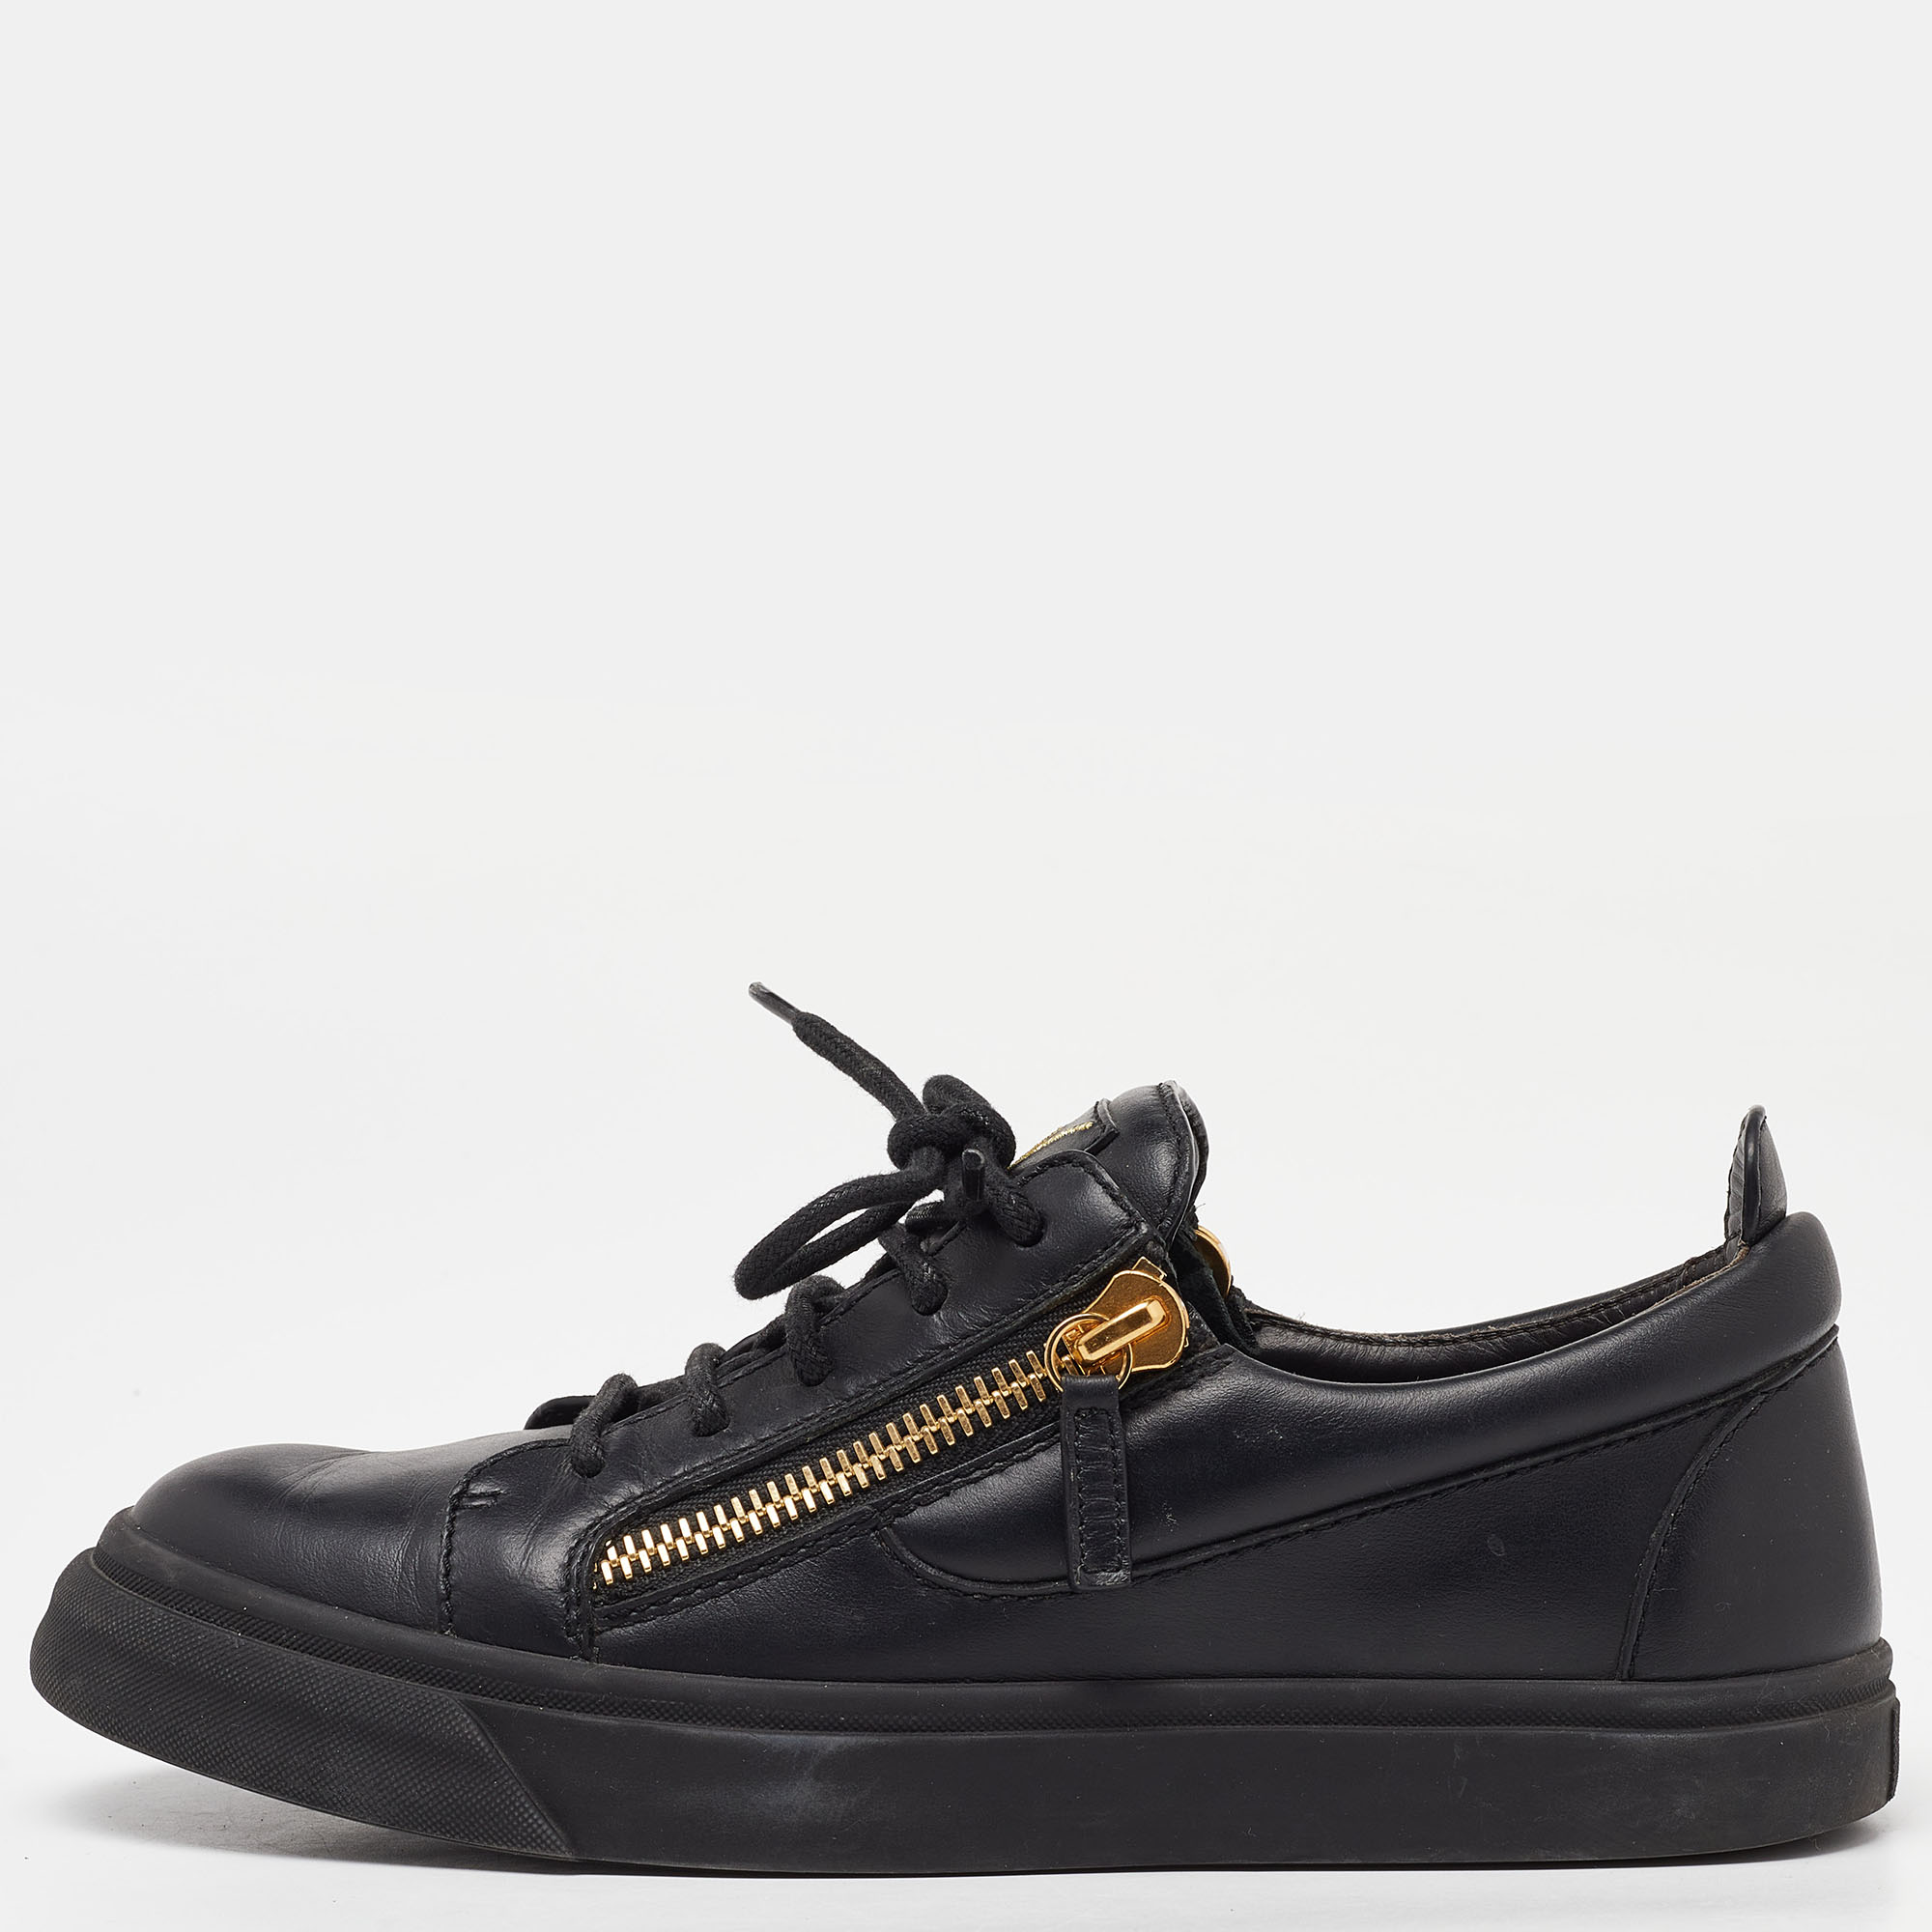 Giuseppe Zanotti Black Leather Double Zipper Low Top Sneakers Size 39